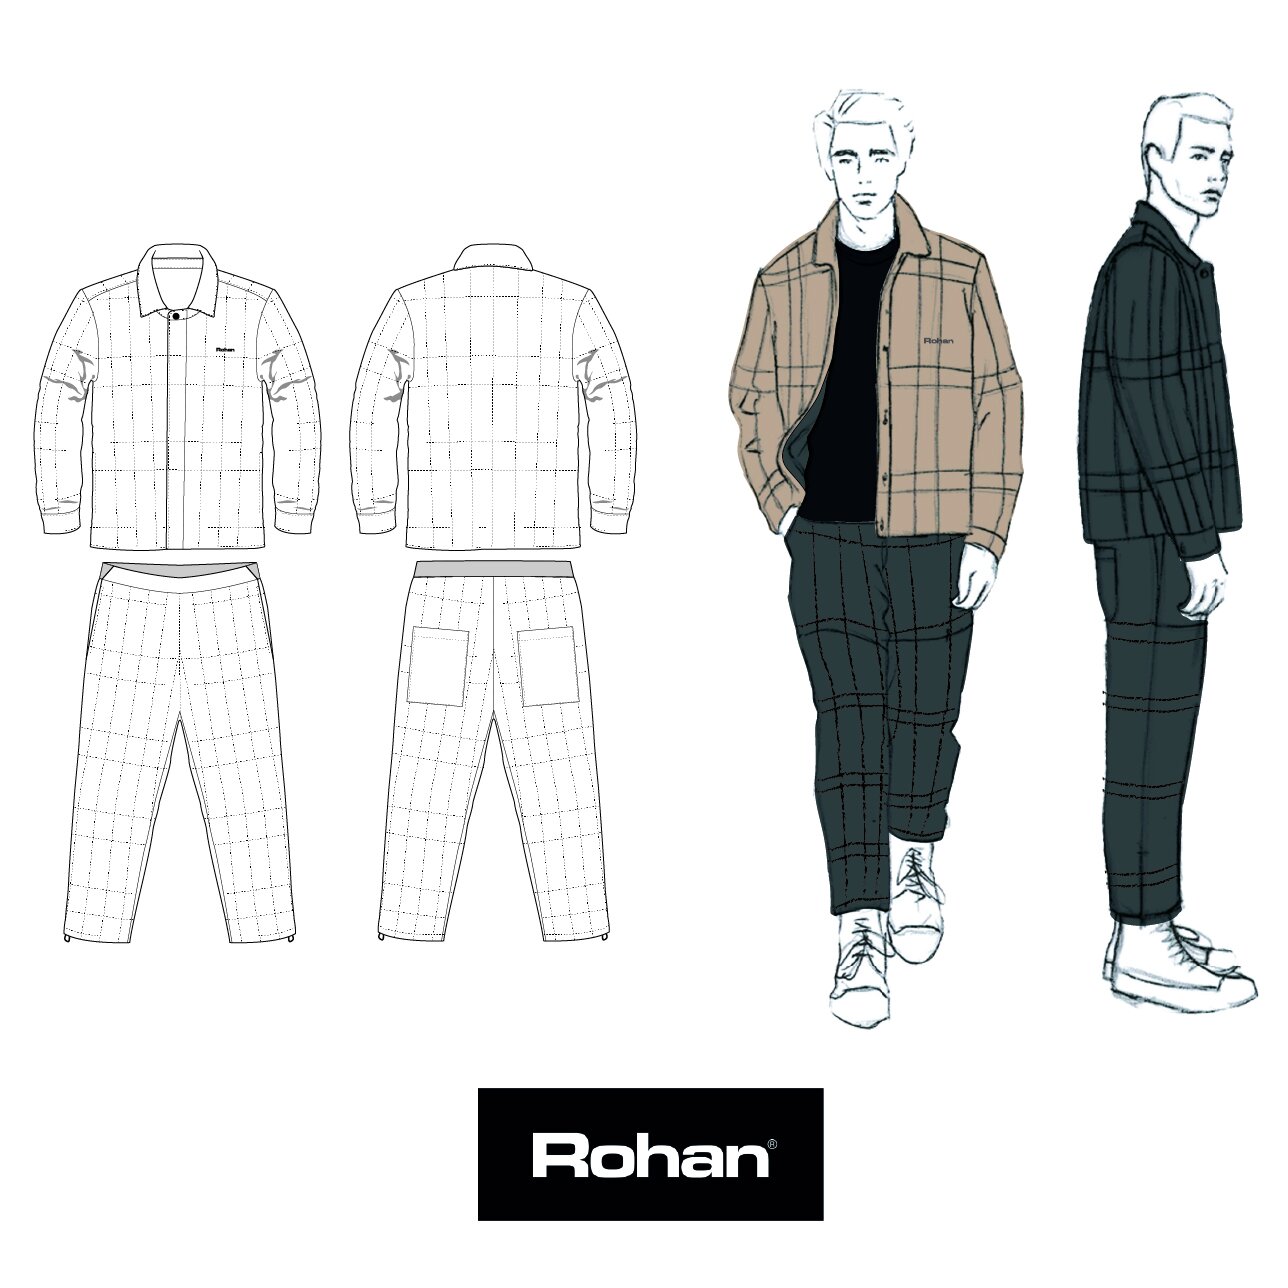 Rohan - Design Project